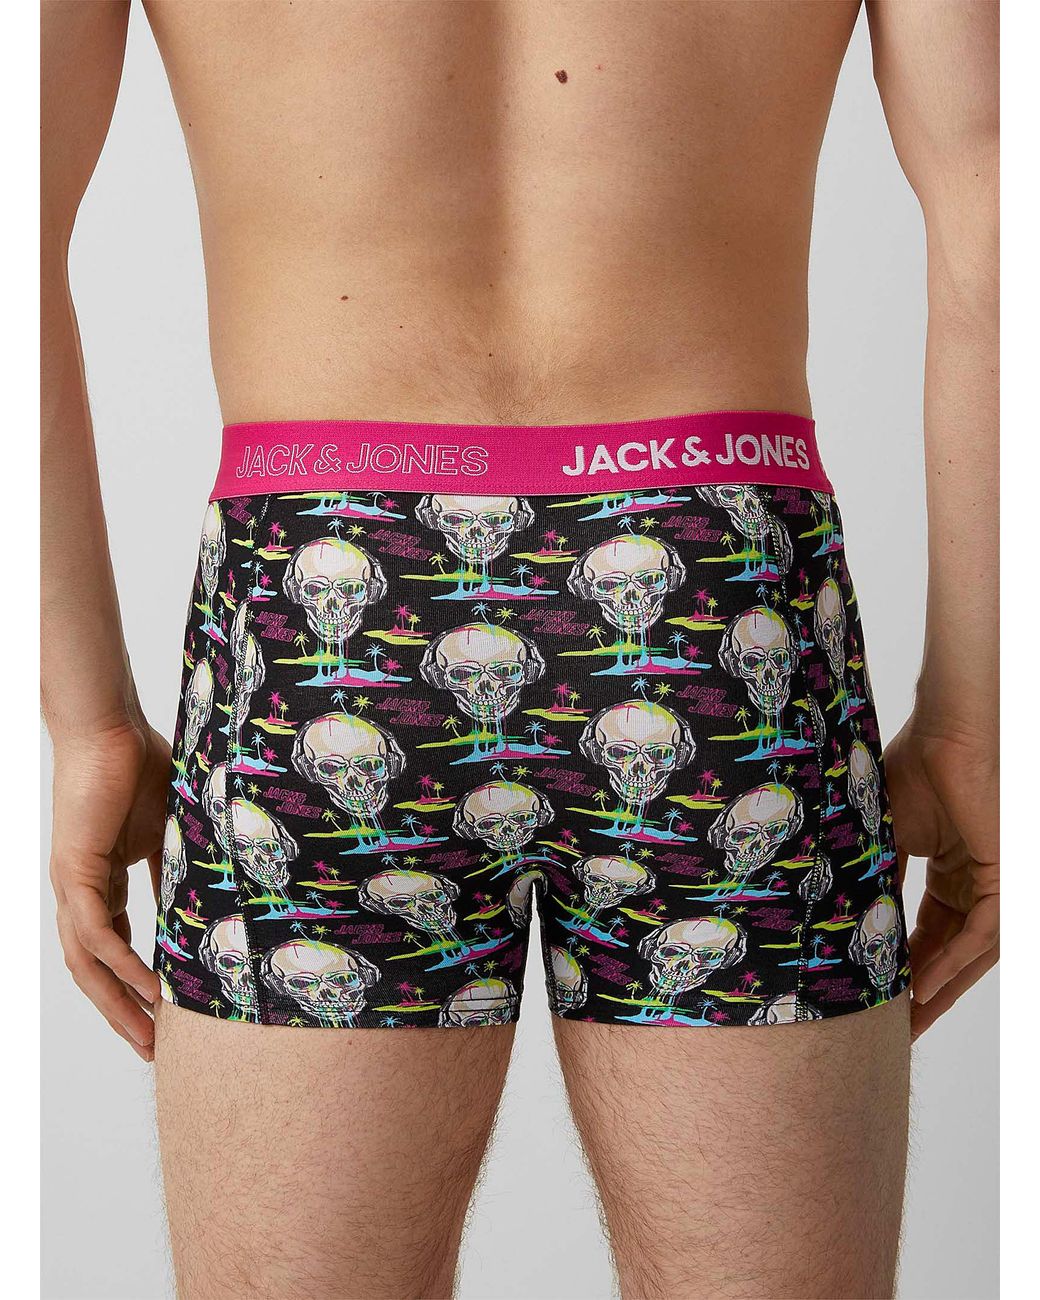 Jack & Jones Cotton Neon Skull Trunk for Men | Lyst